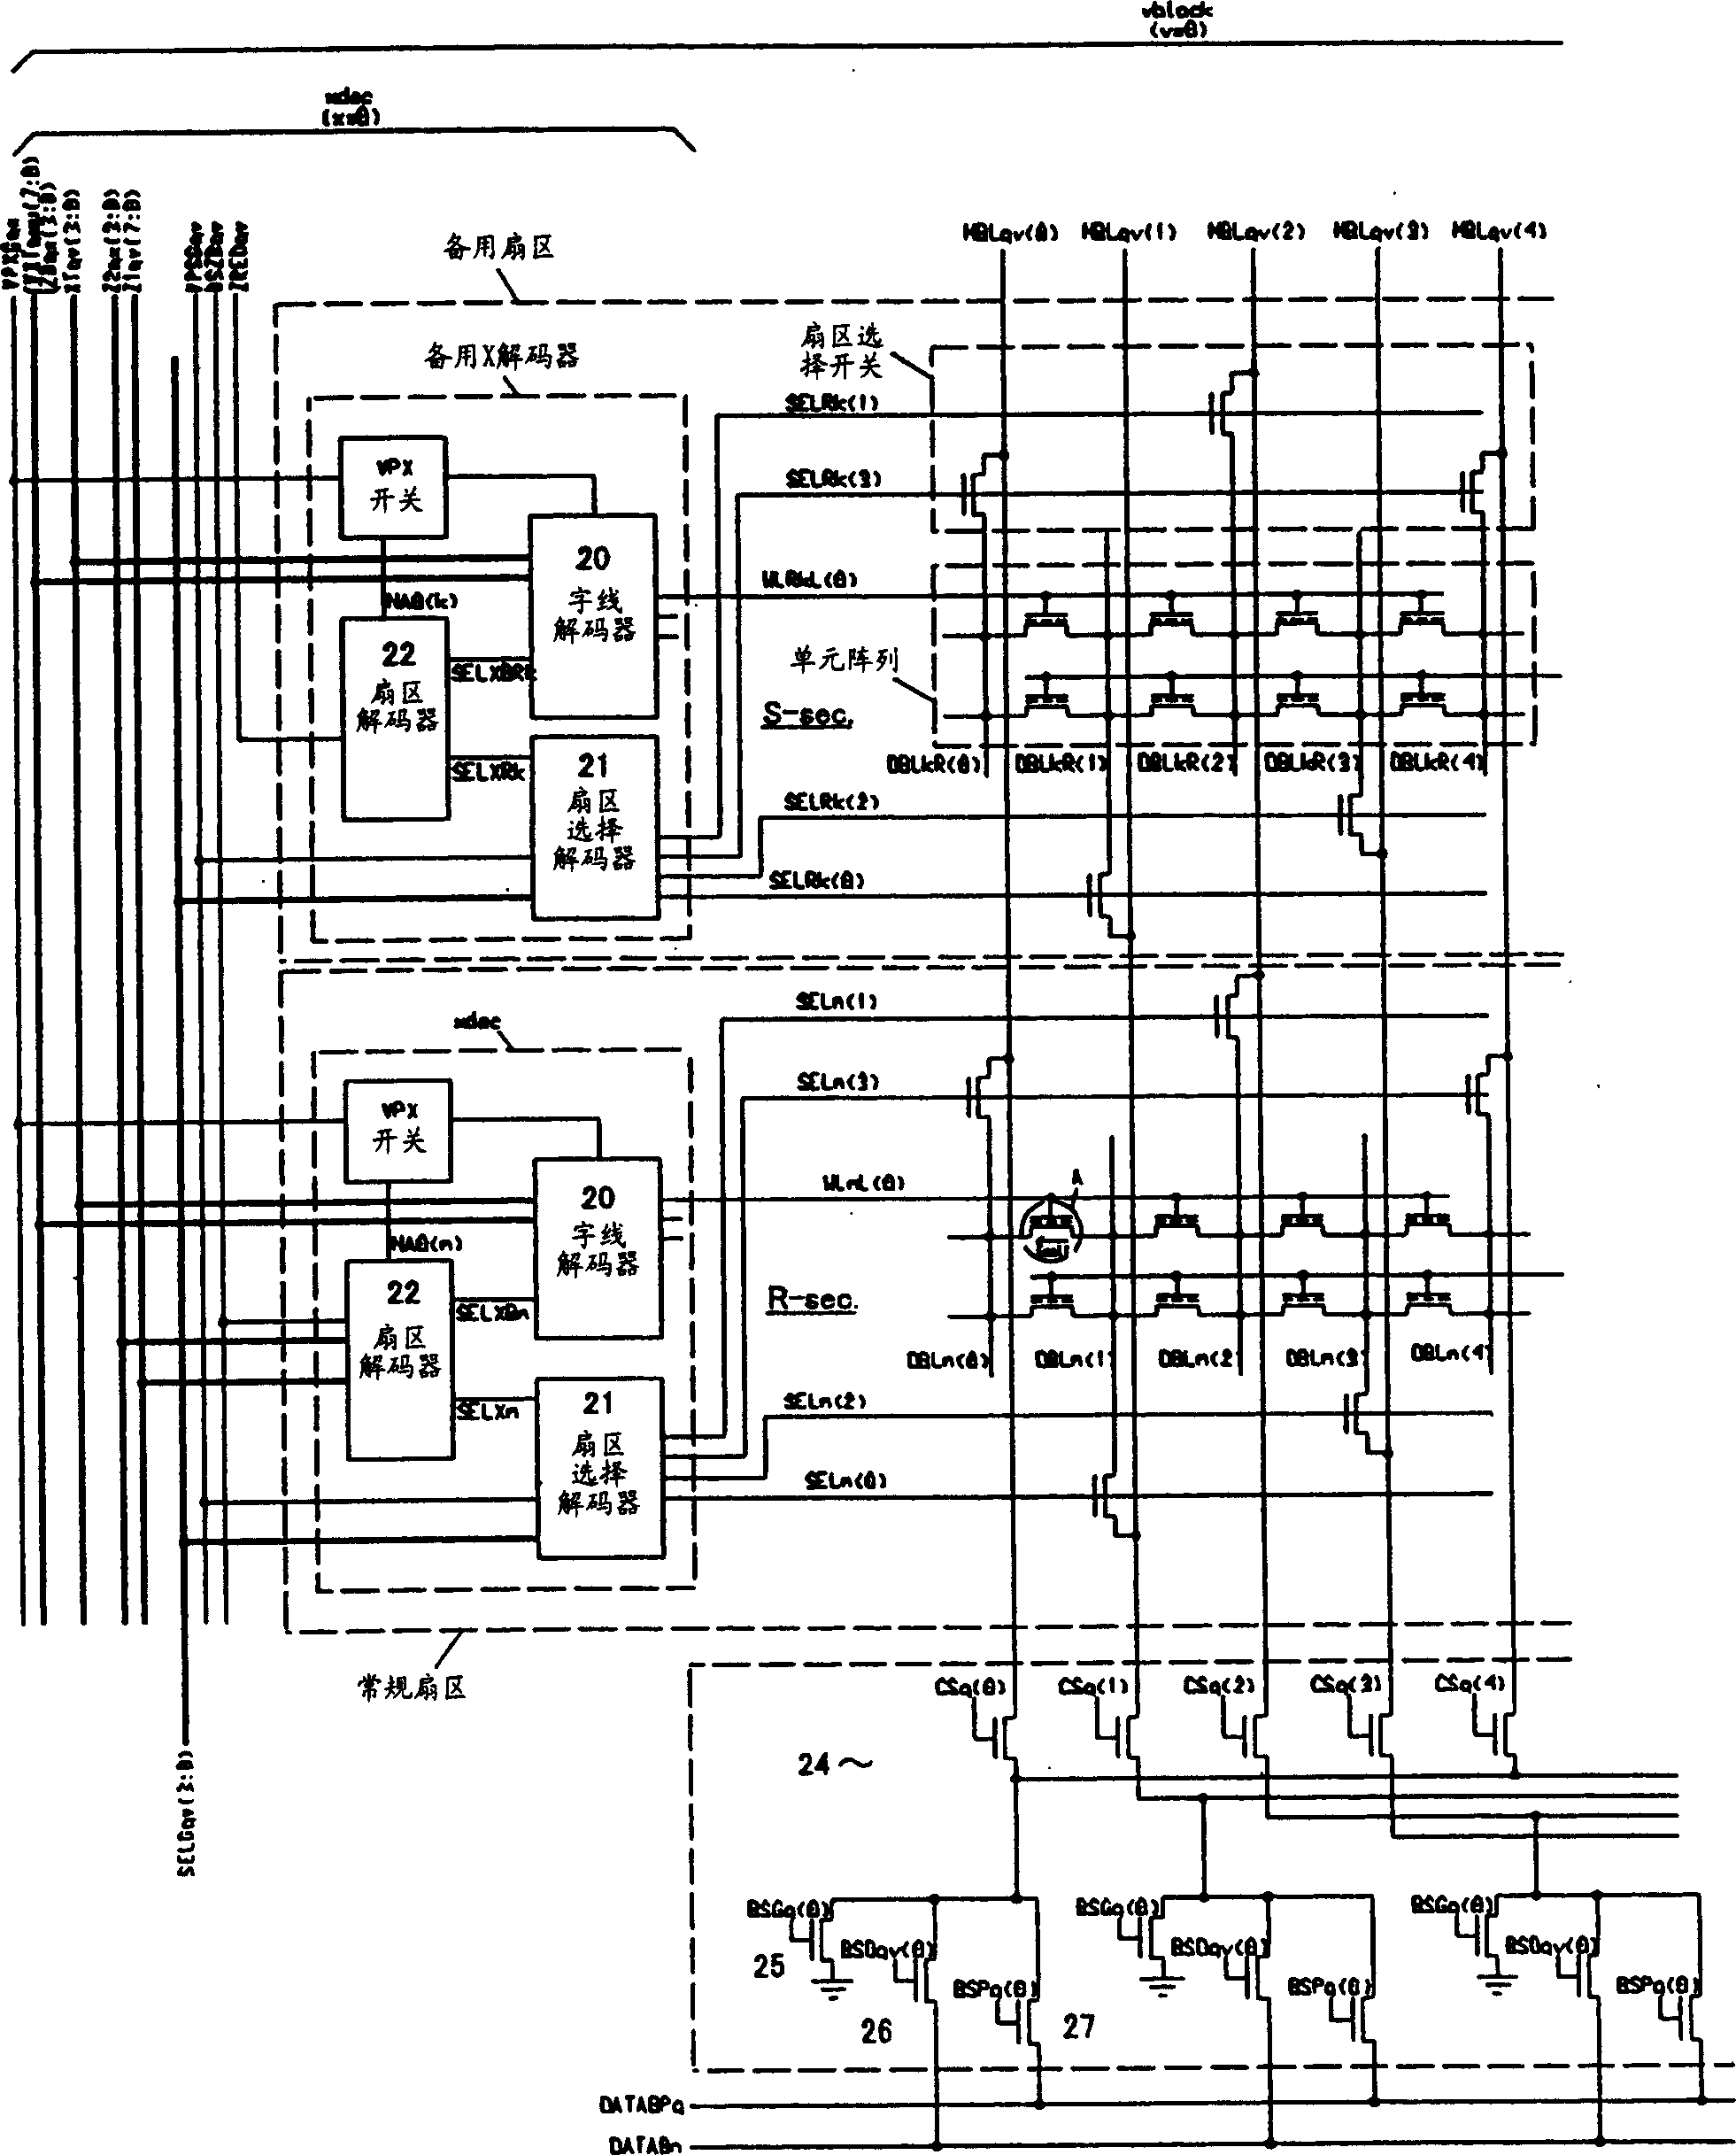 Storage circuit with redundant structure